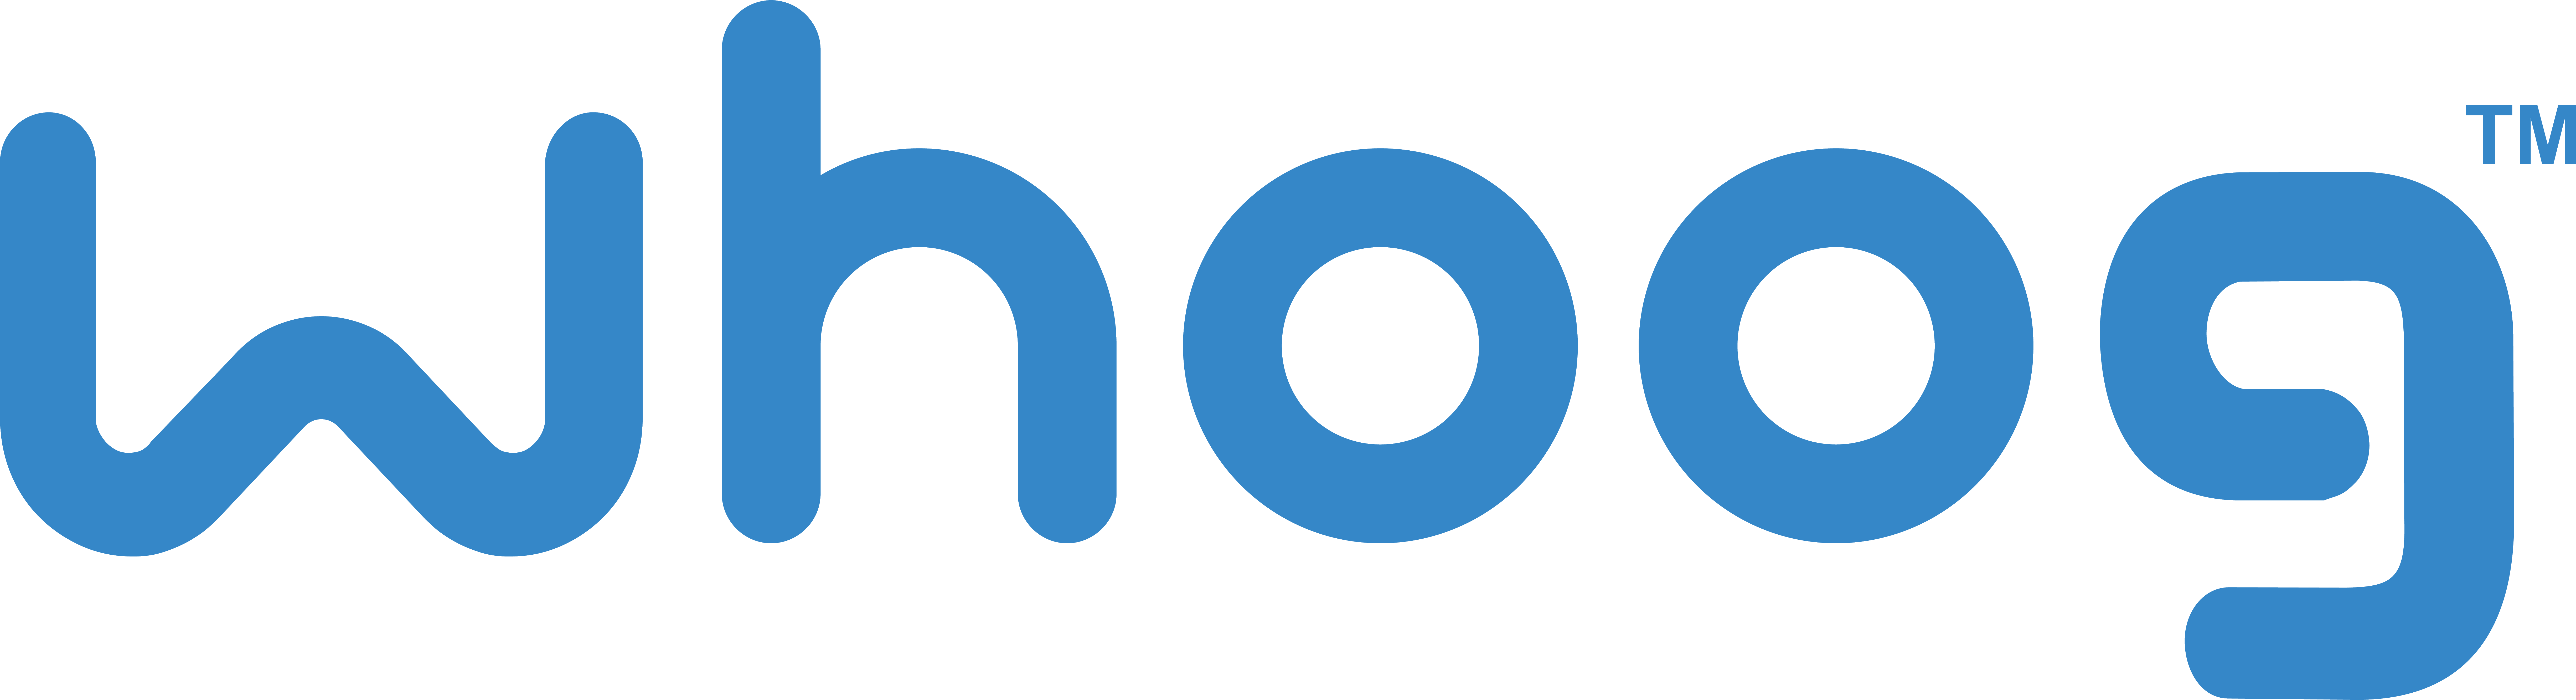 Whoog Logo Bleu